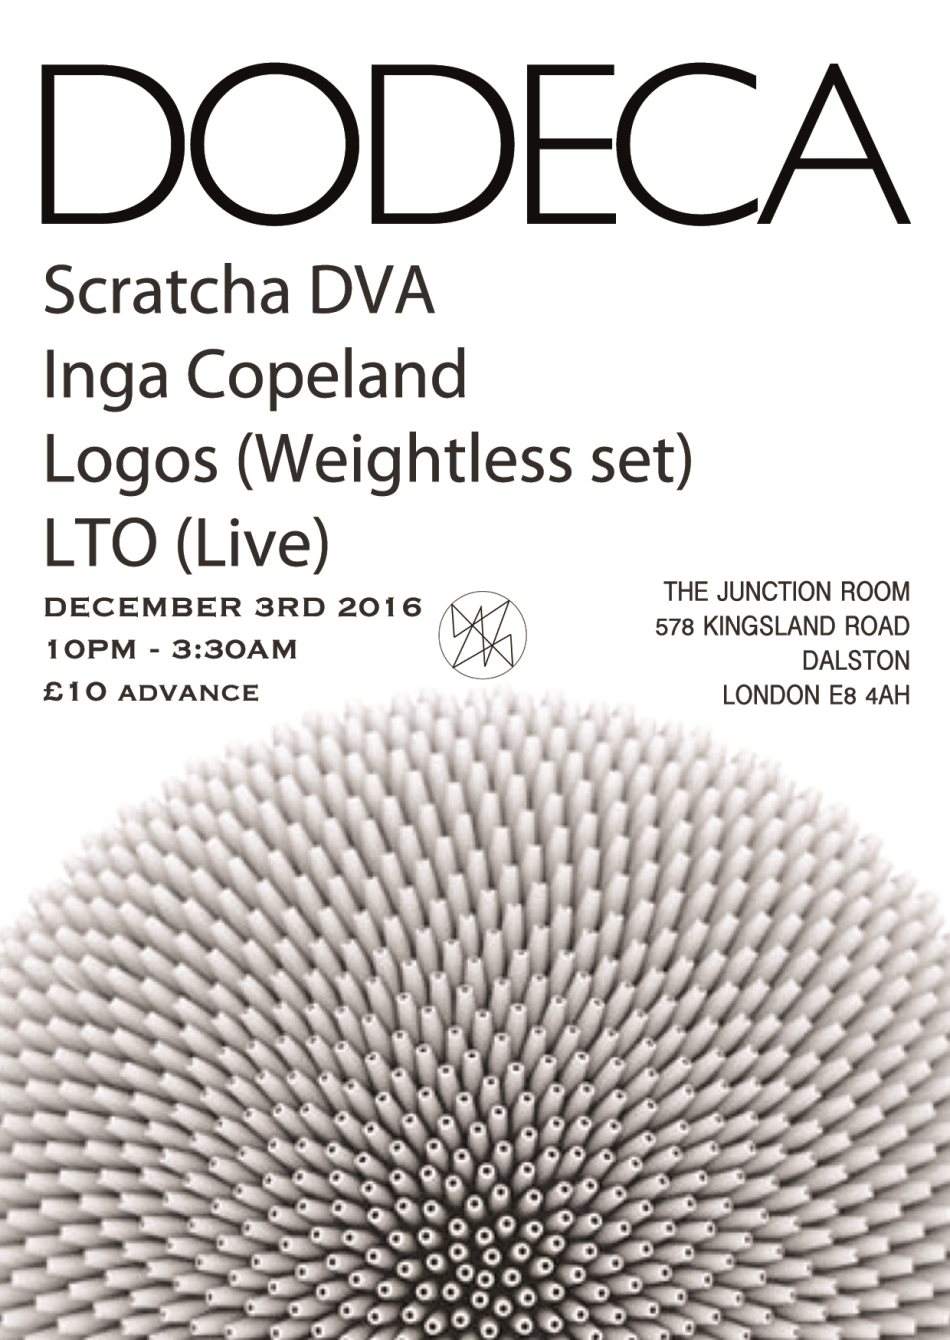 Dodeca presents Scratcha DVA, Inga Copeland, Logos, LTO - フライヤー表